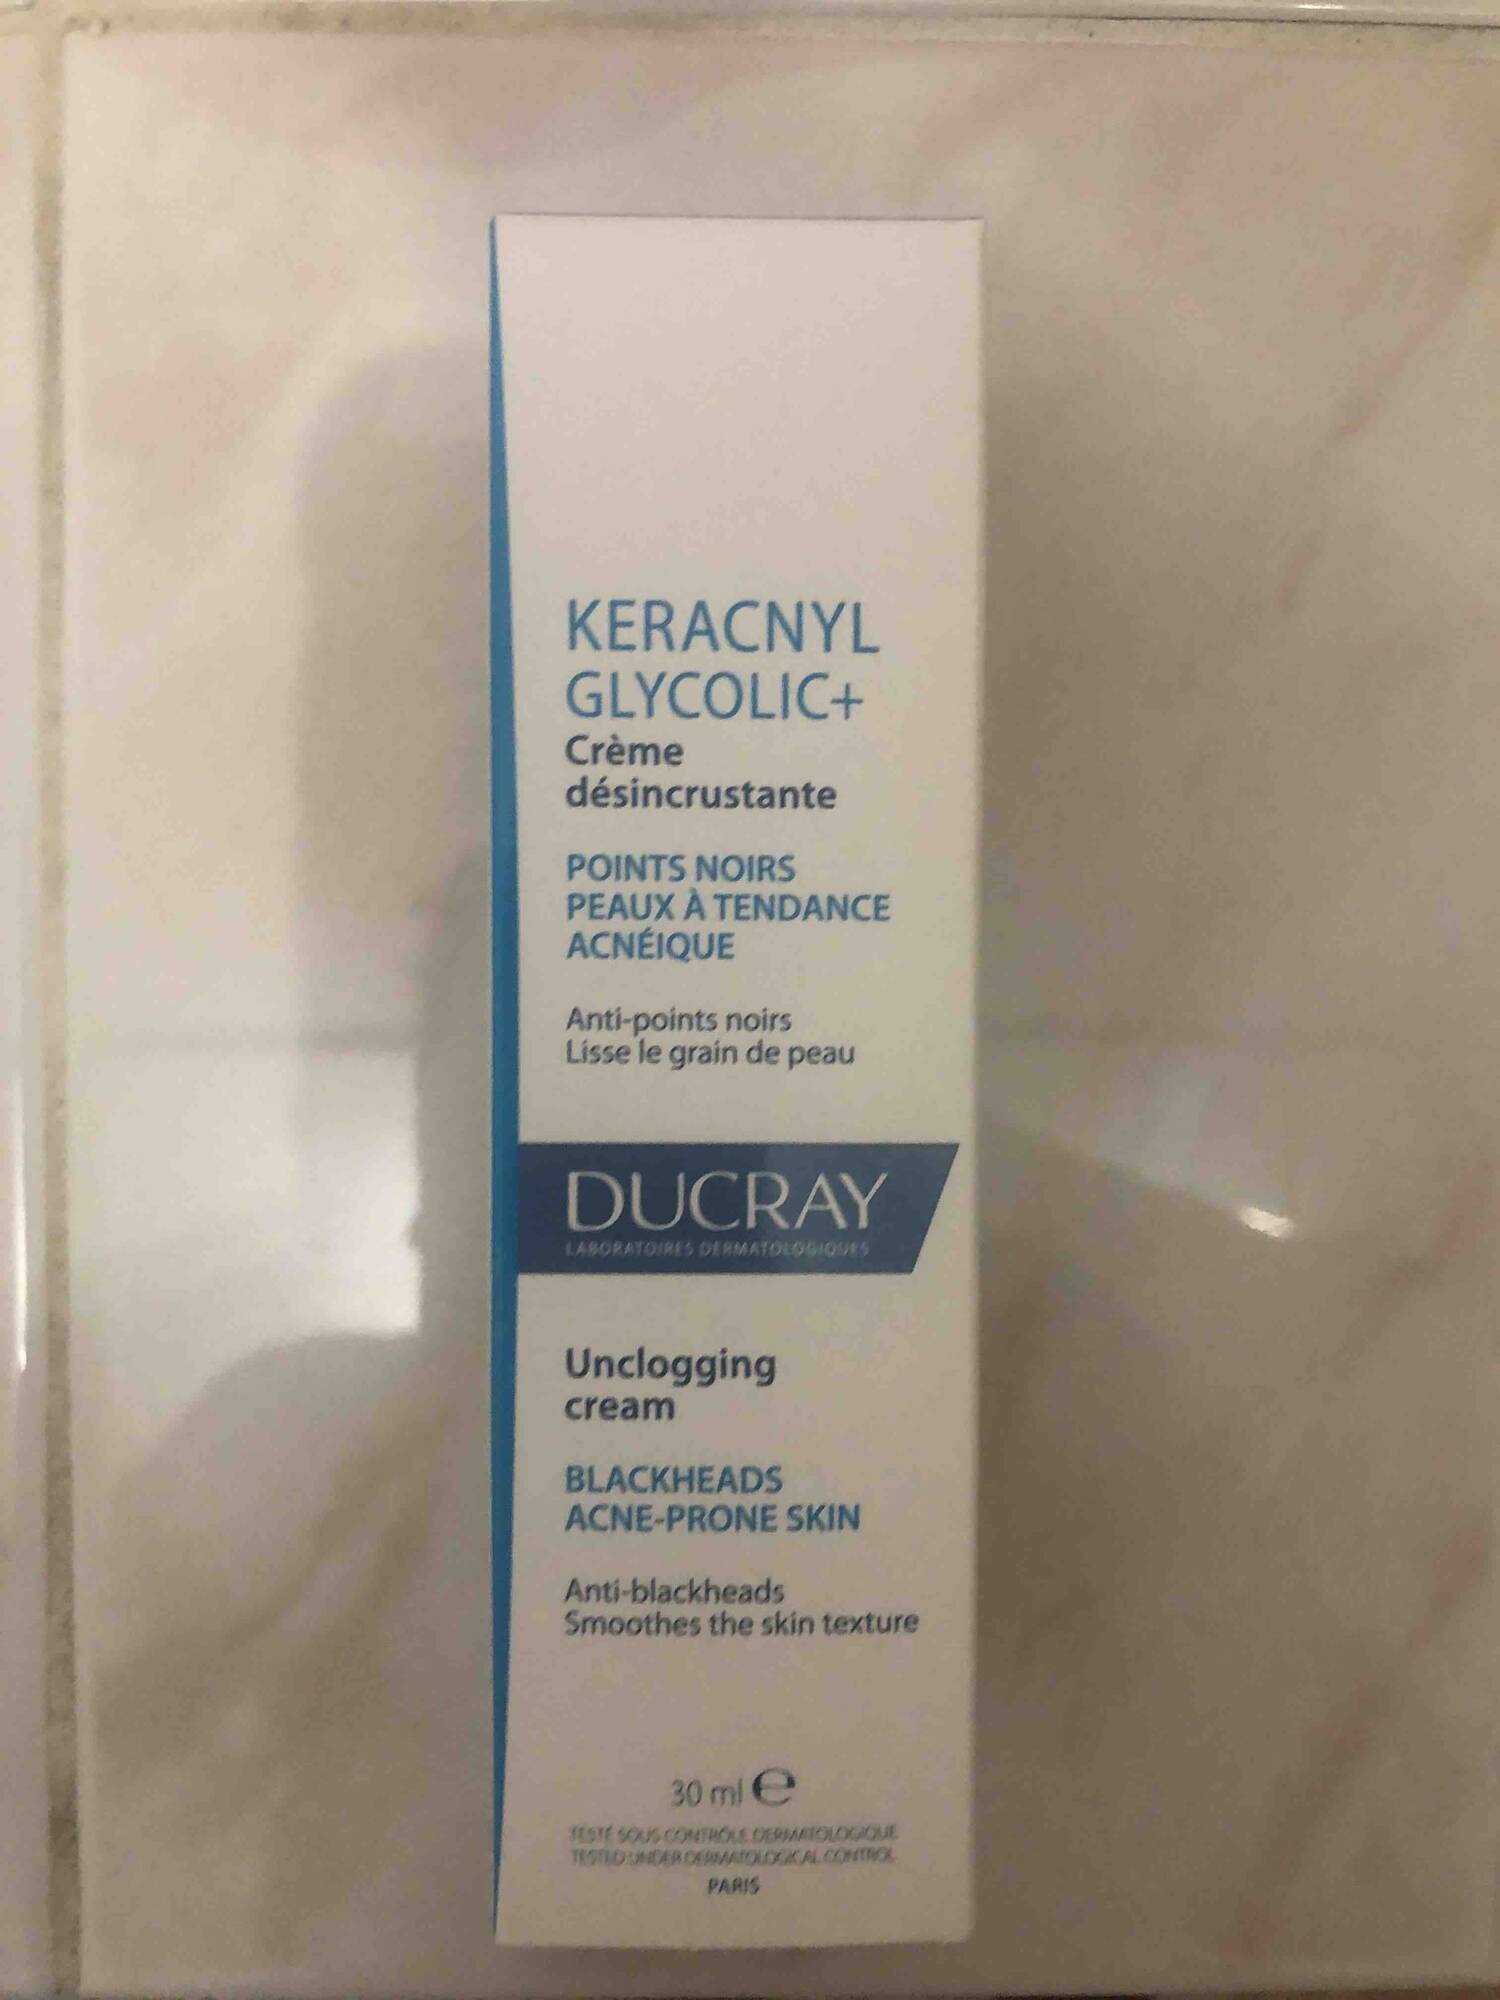 DUCRAY - Keracnyl glycolic+ - Crème désincrustante